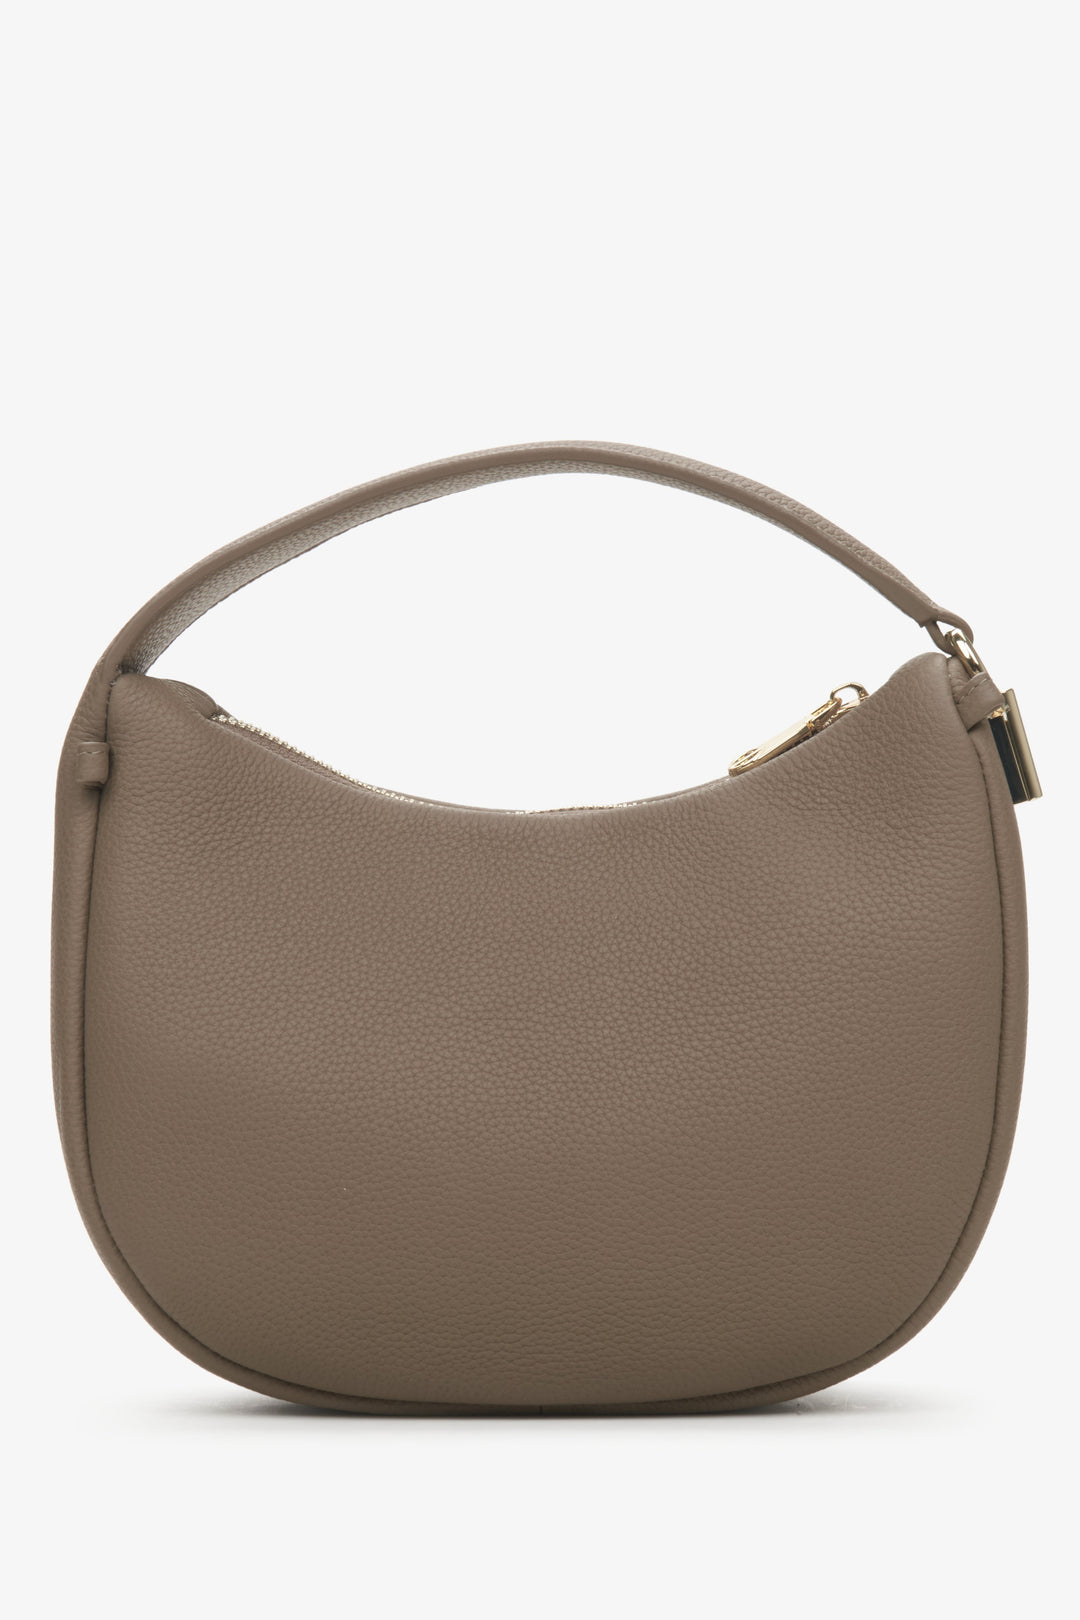 Brown Crescent Shaped Handbag made of Genuine Leather Estro ER00114353.